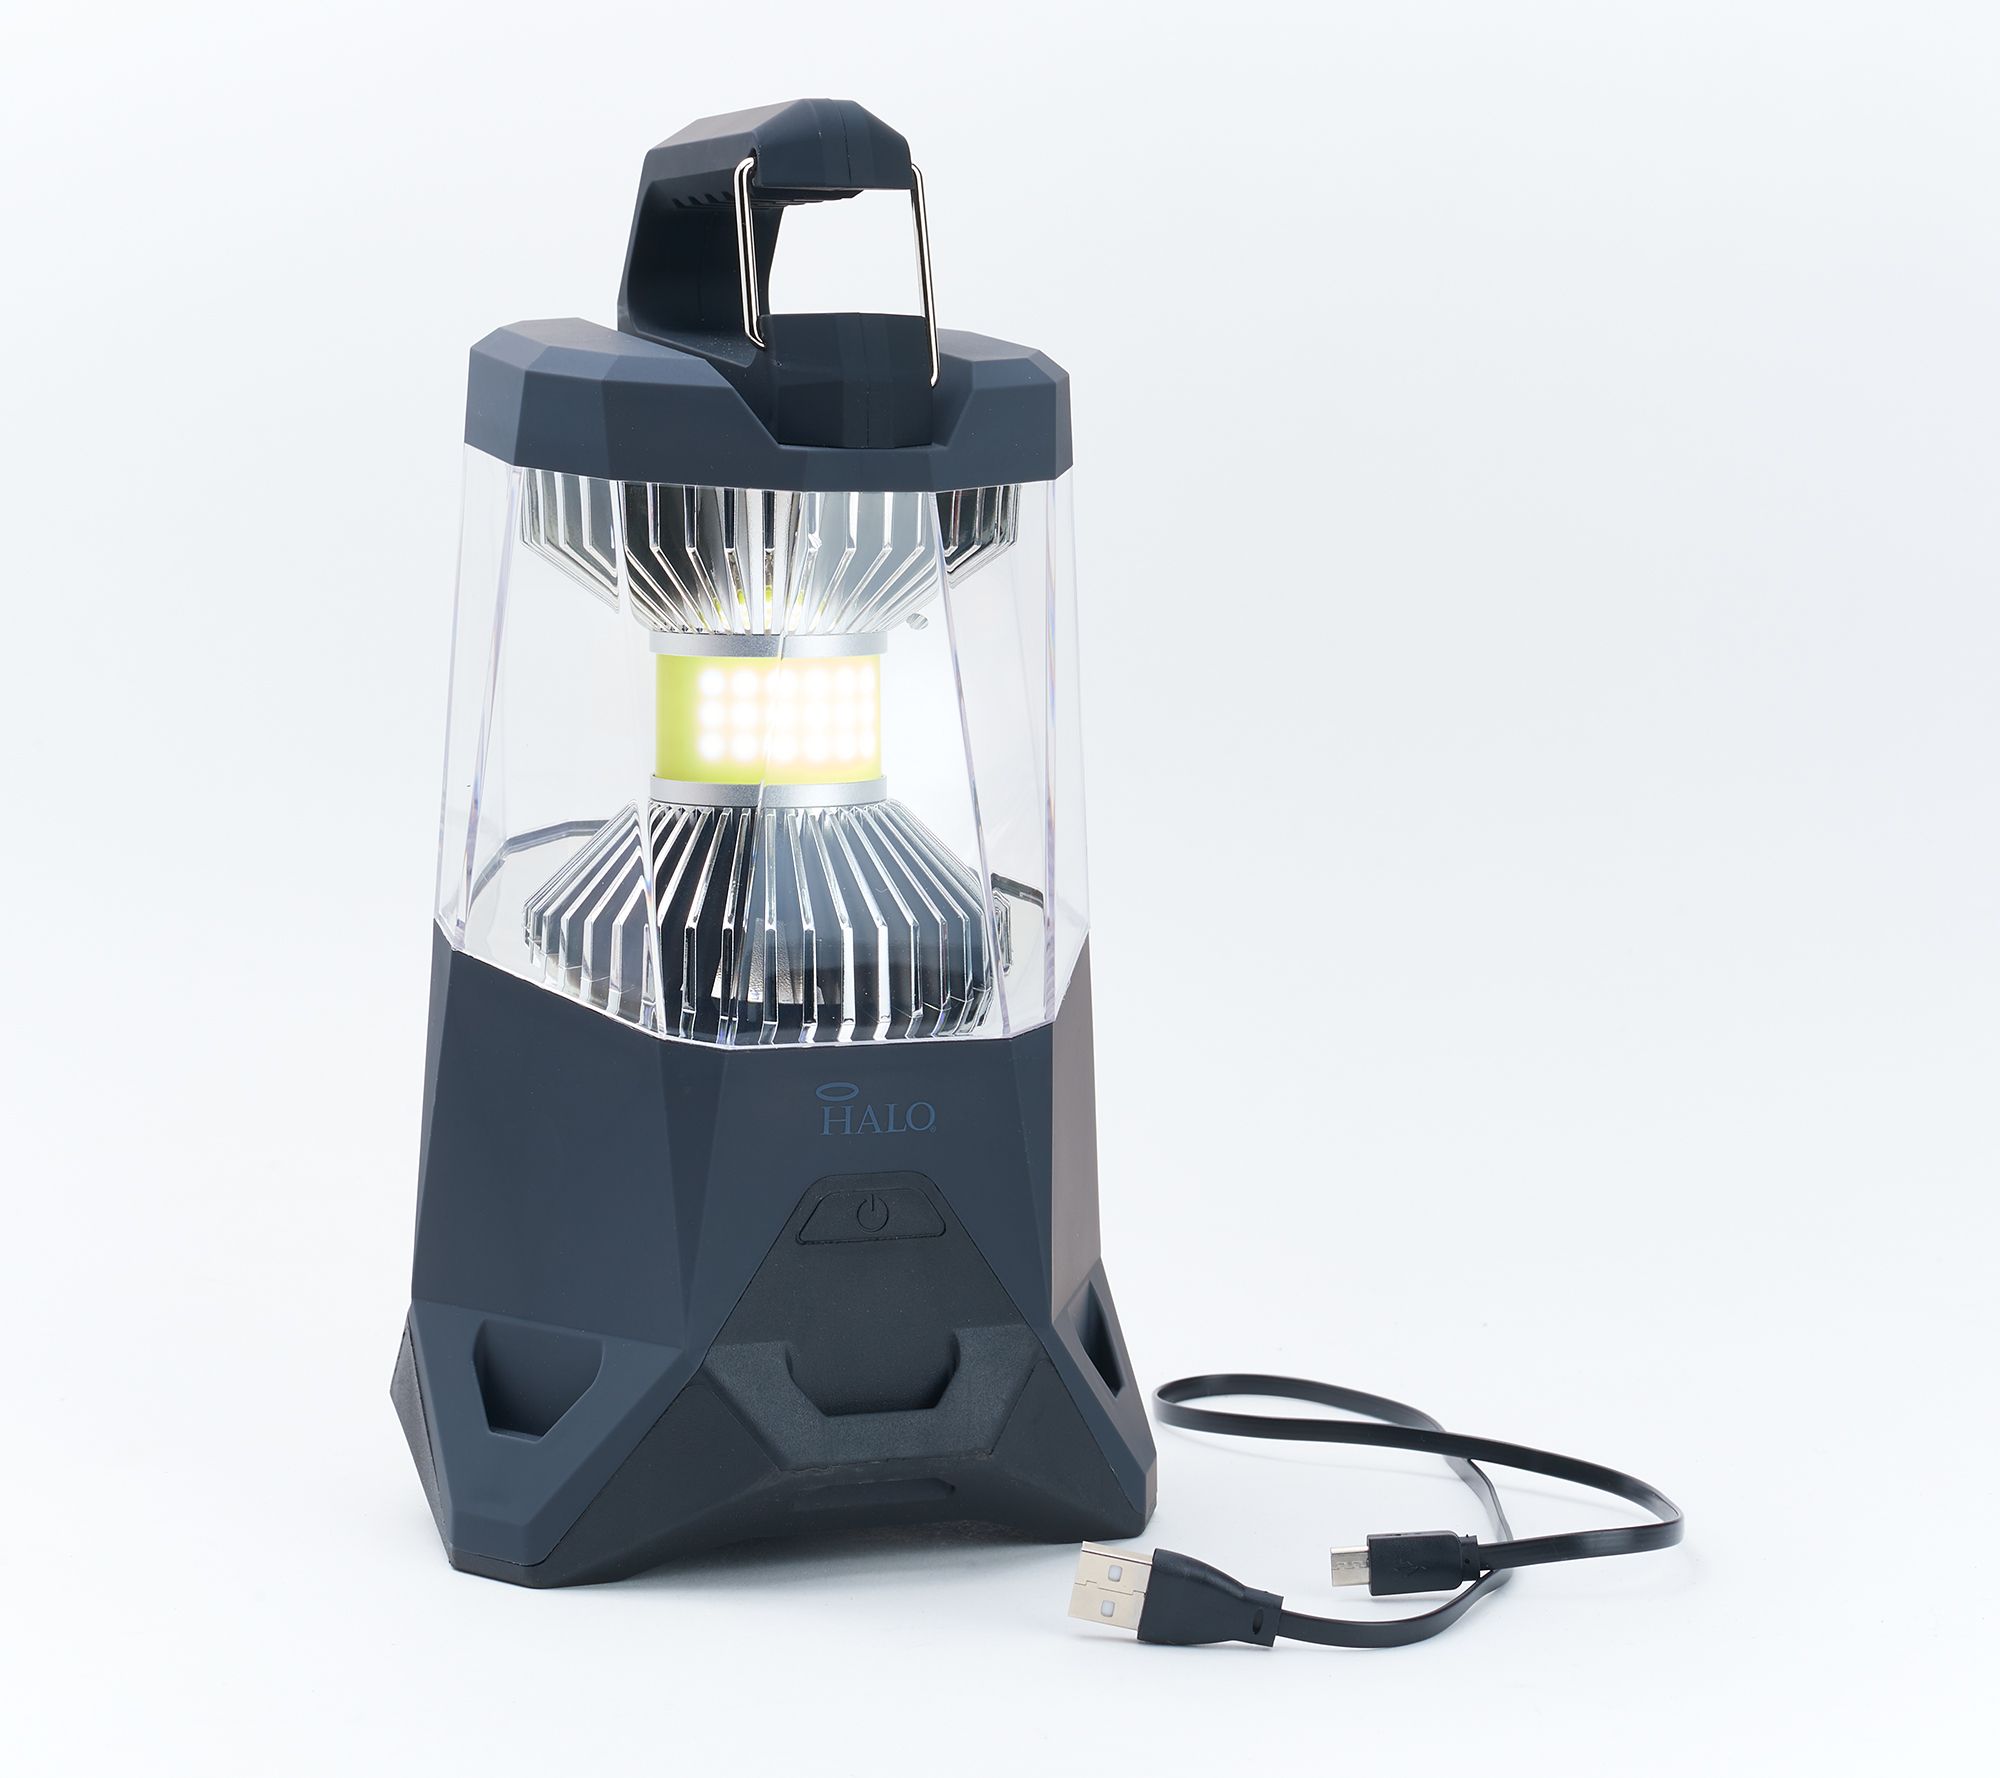 Ozark Trail LED Flame Light Lantern, 100 Lumen, 2 Pack, Black